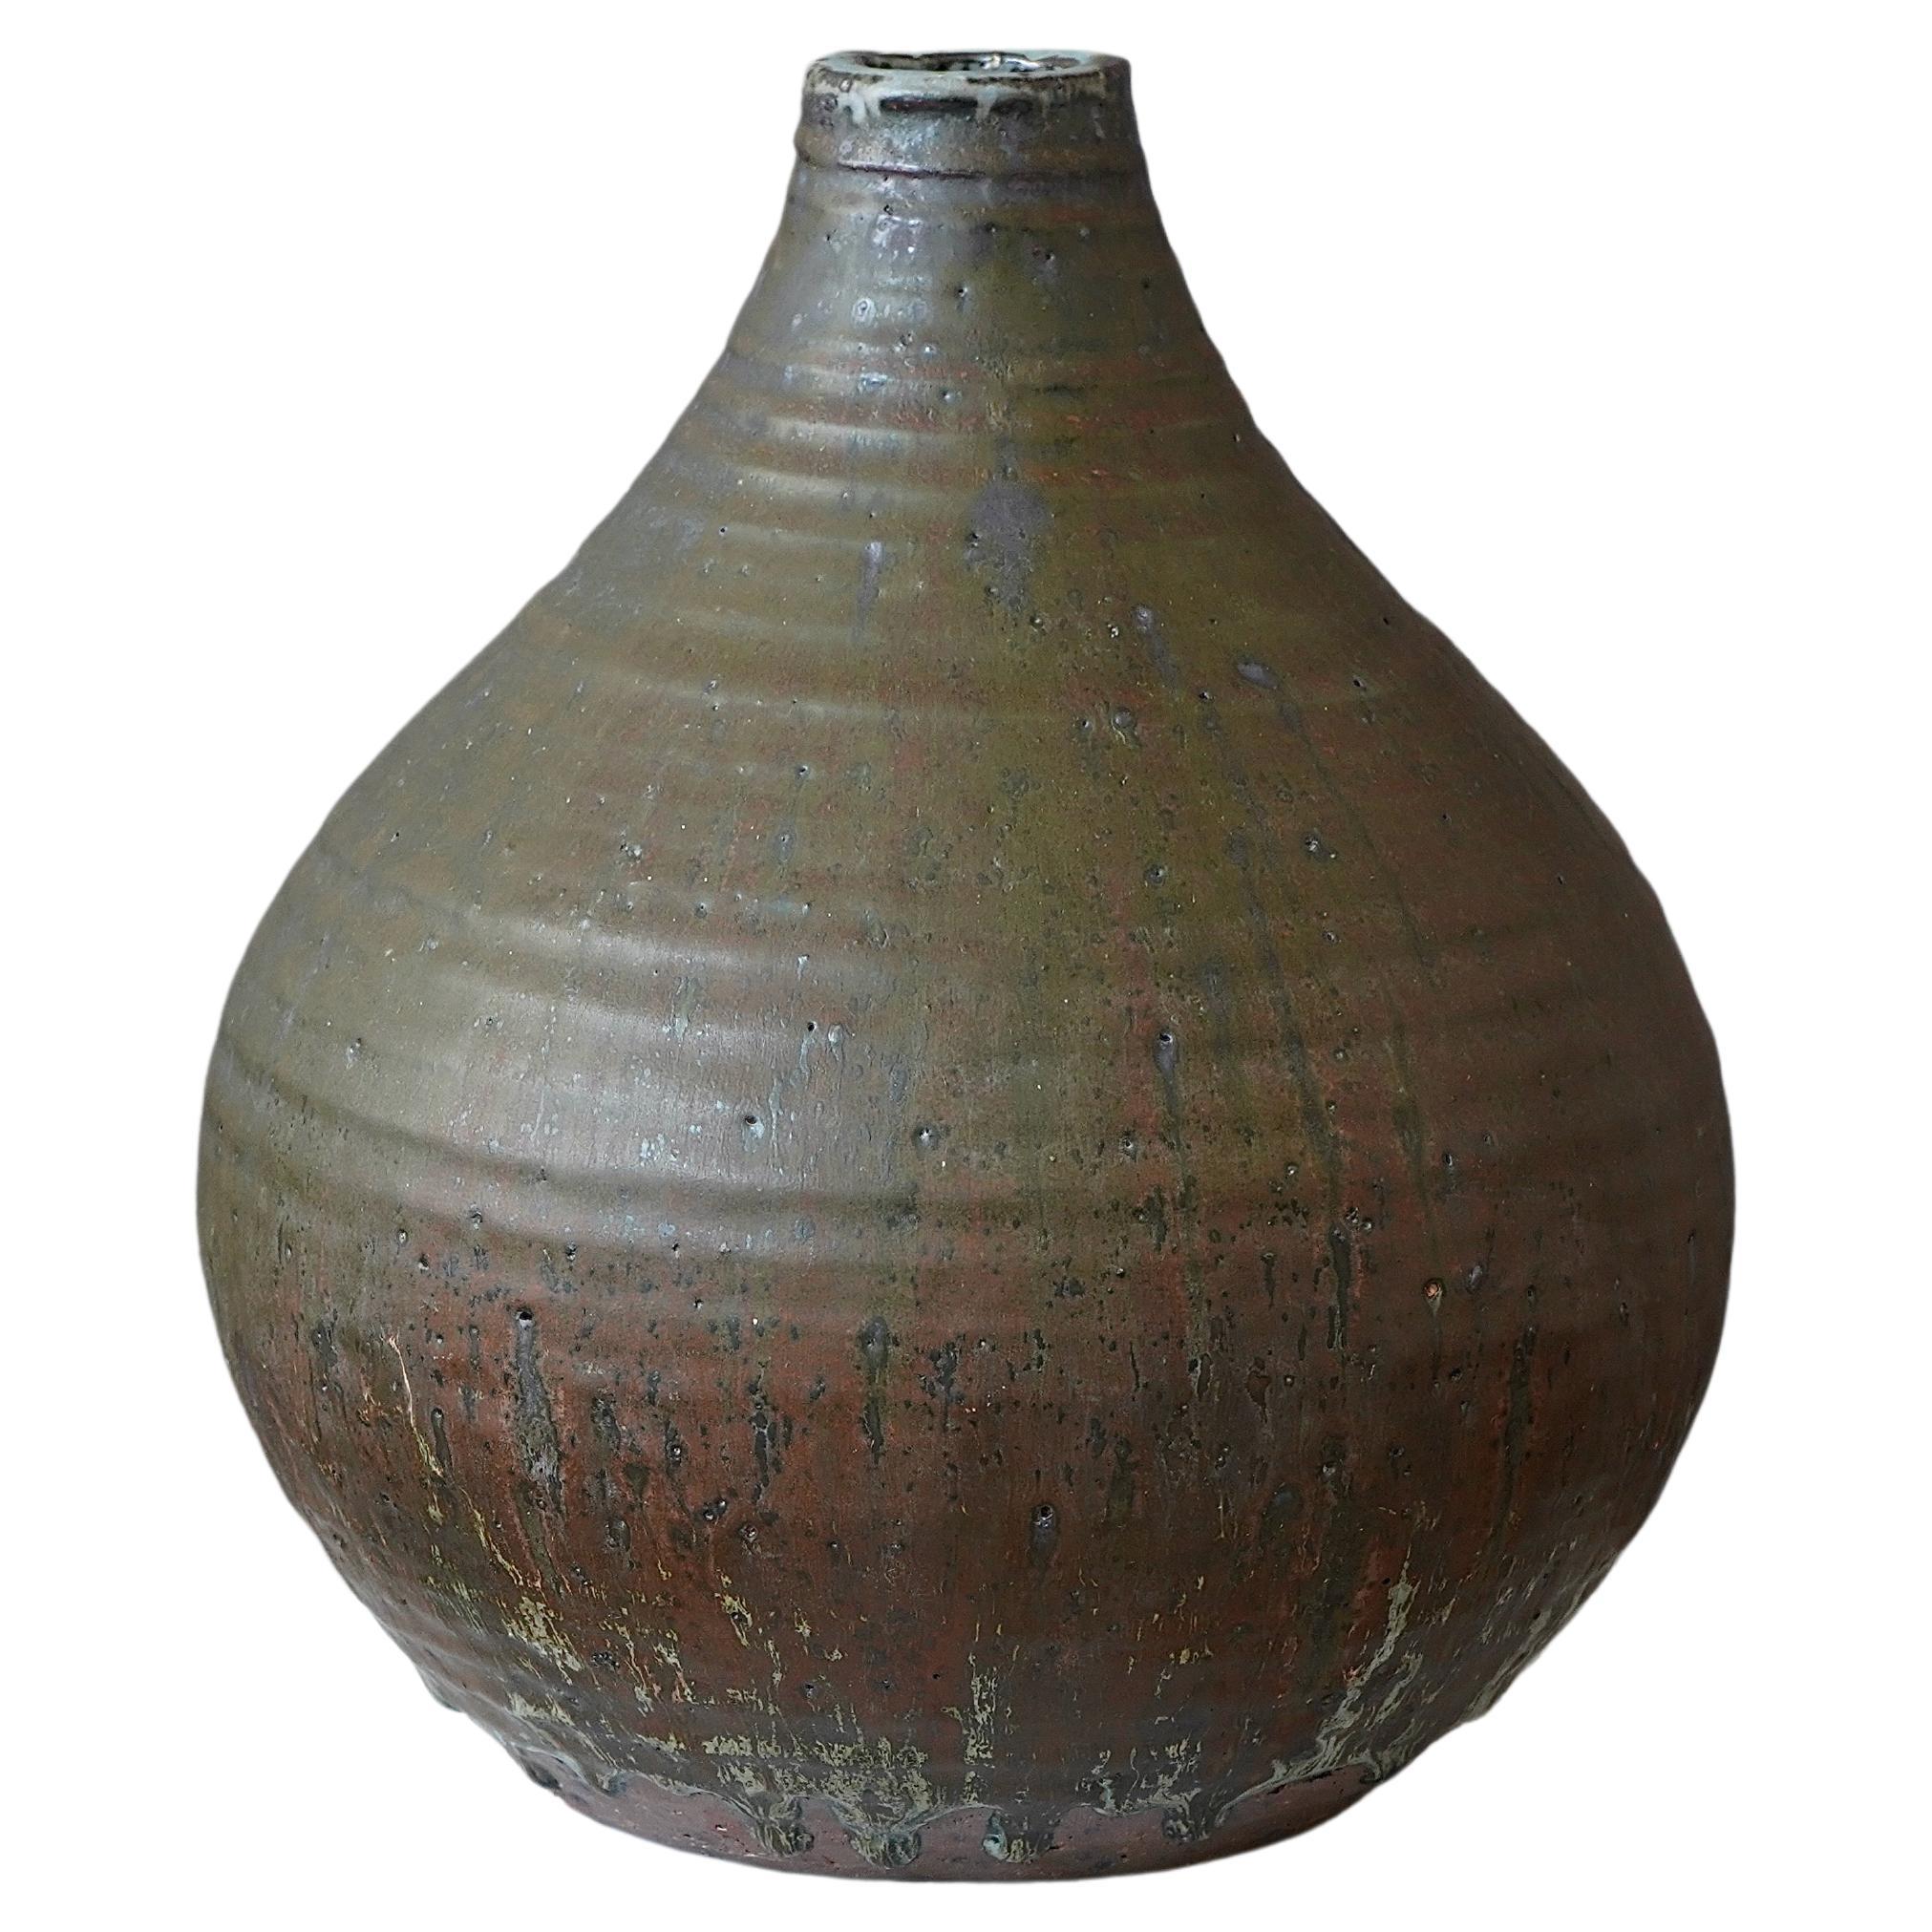 Grand vase en grès du céramiste suédois Rolf Palm, 1964